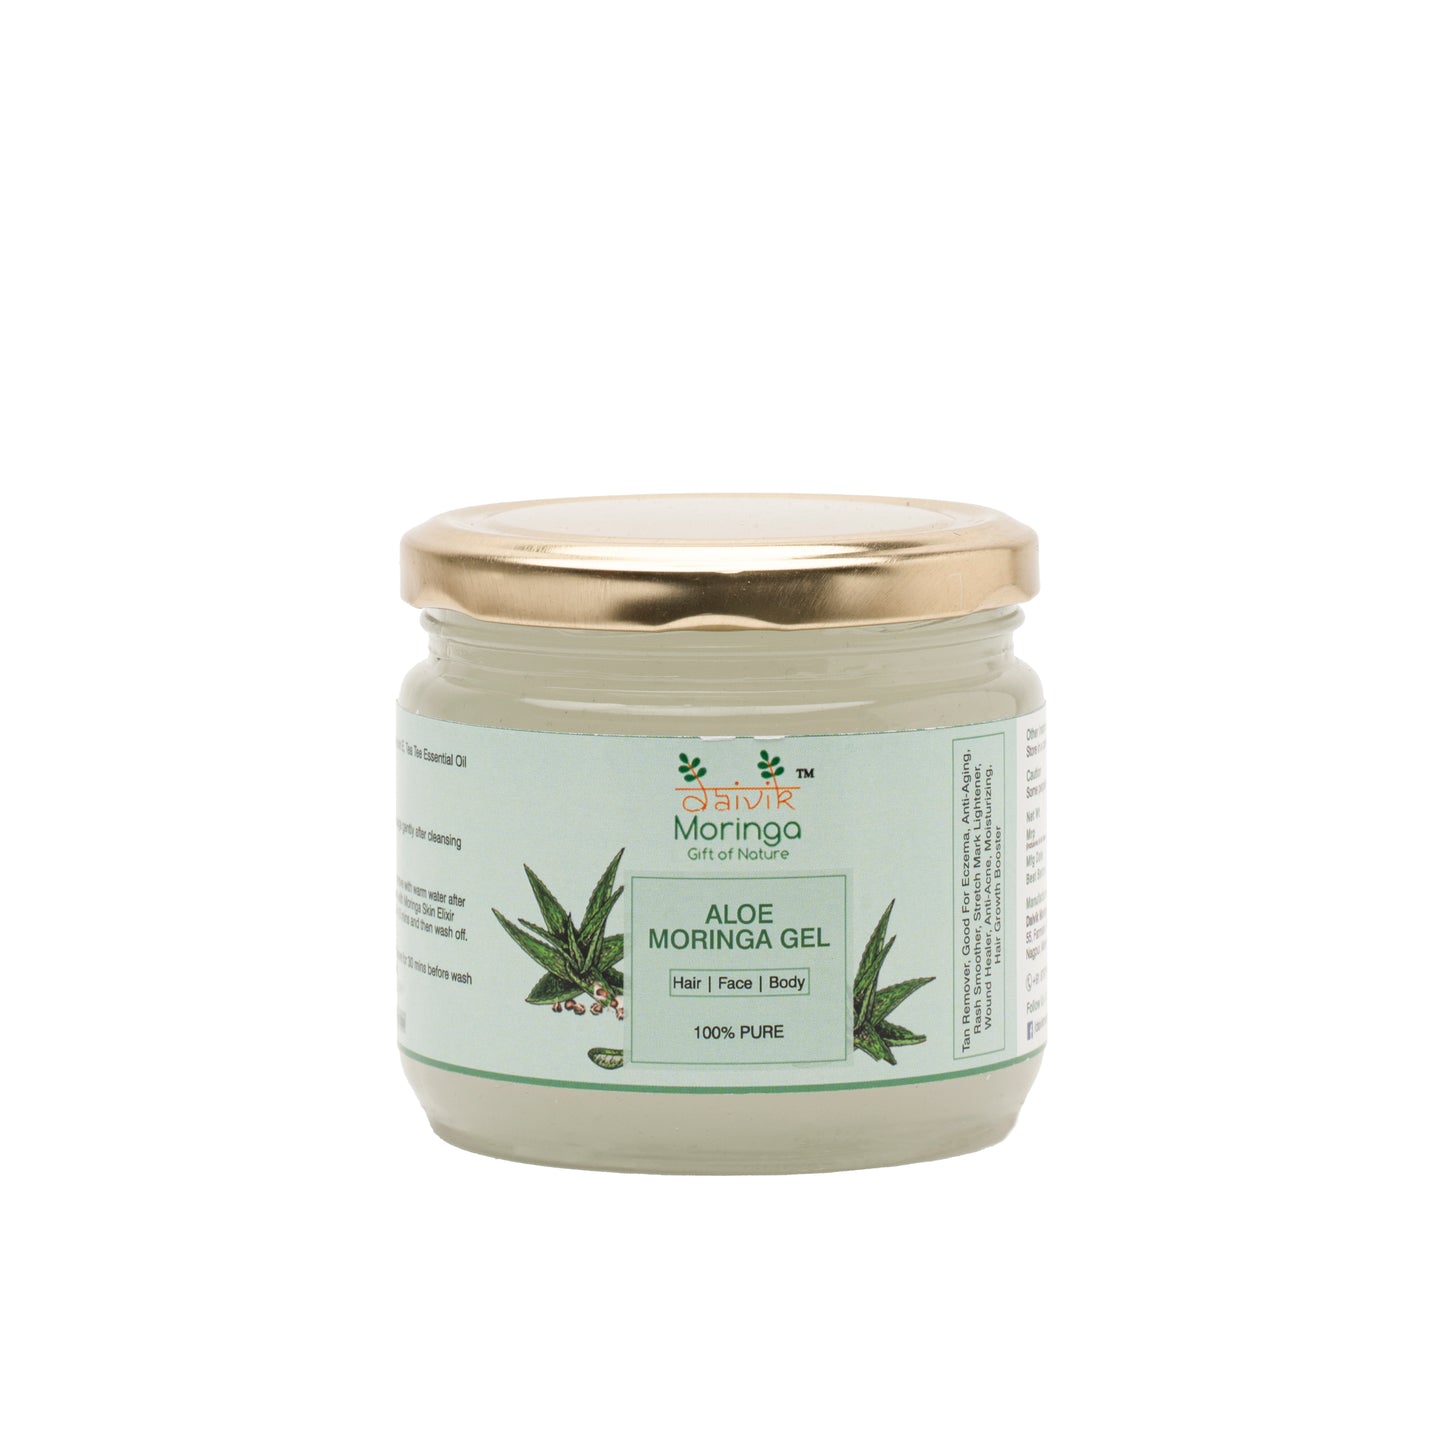 Daivik Moringa Aloe Moringa Gel | 100% Natural | Anti Aging, Anti Acne, Hair Growth, Moisturizer | 300 g